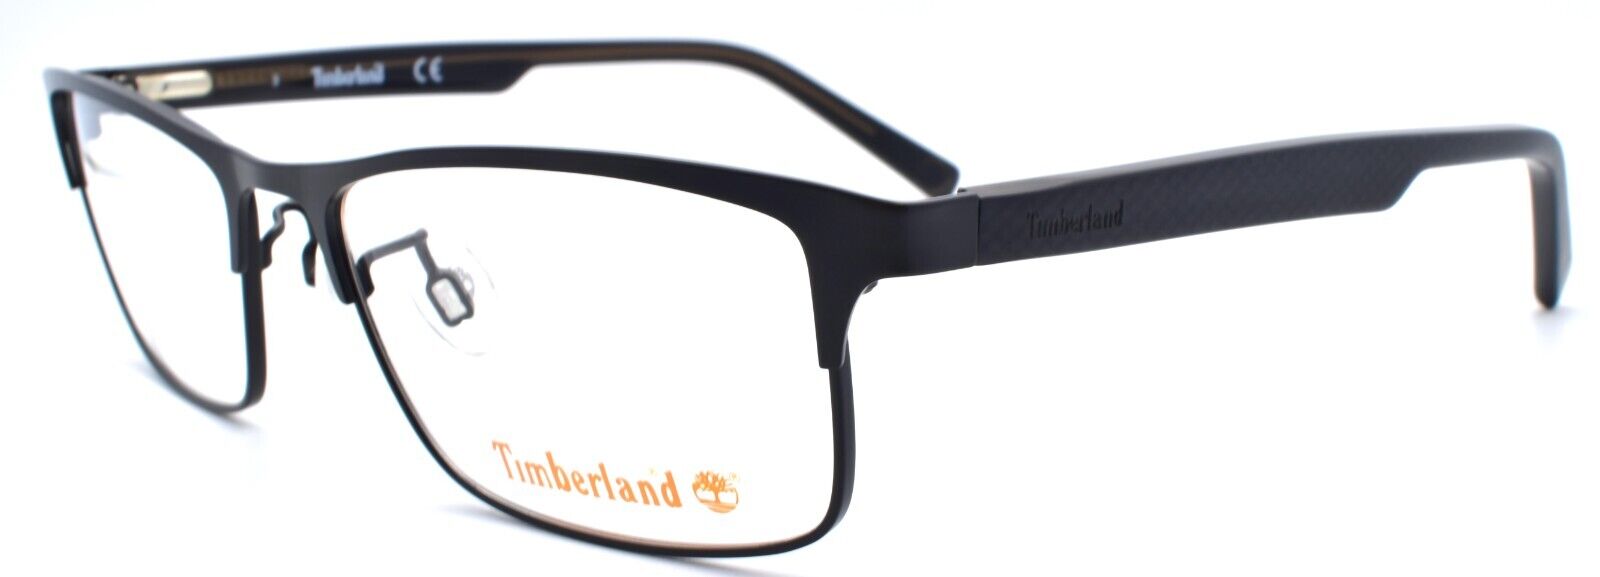 1-TIMBERLAND TB1547 002 Men's Eyeglasses Frames 53-17-140 Matte Black-664689750078-IKSpecs